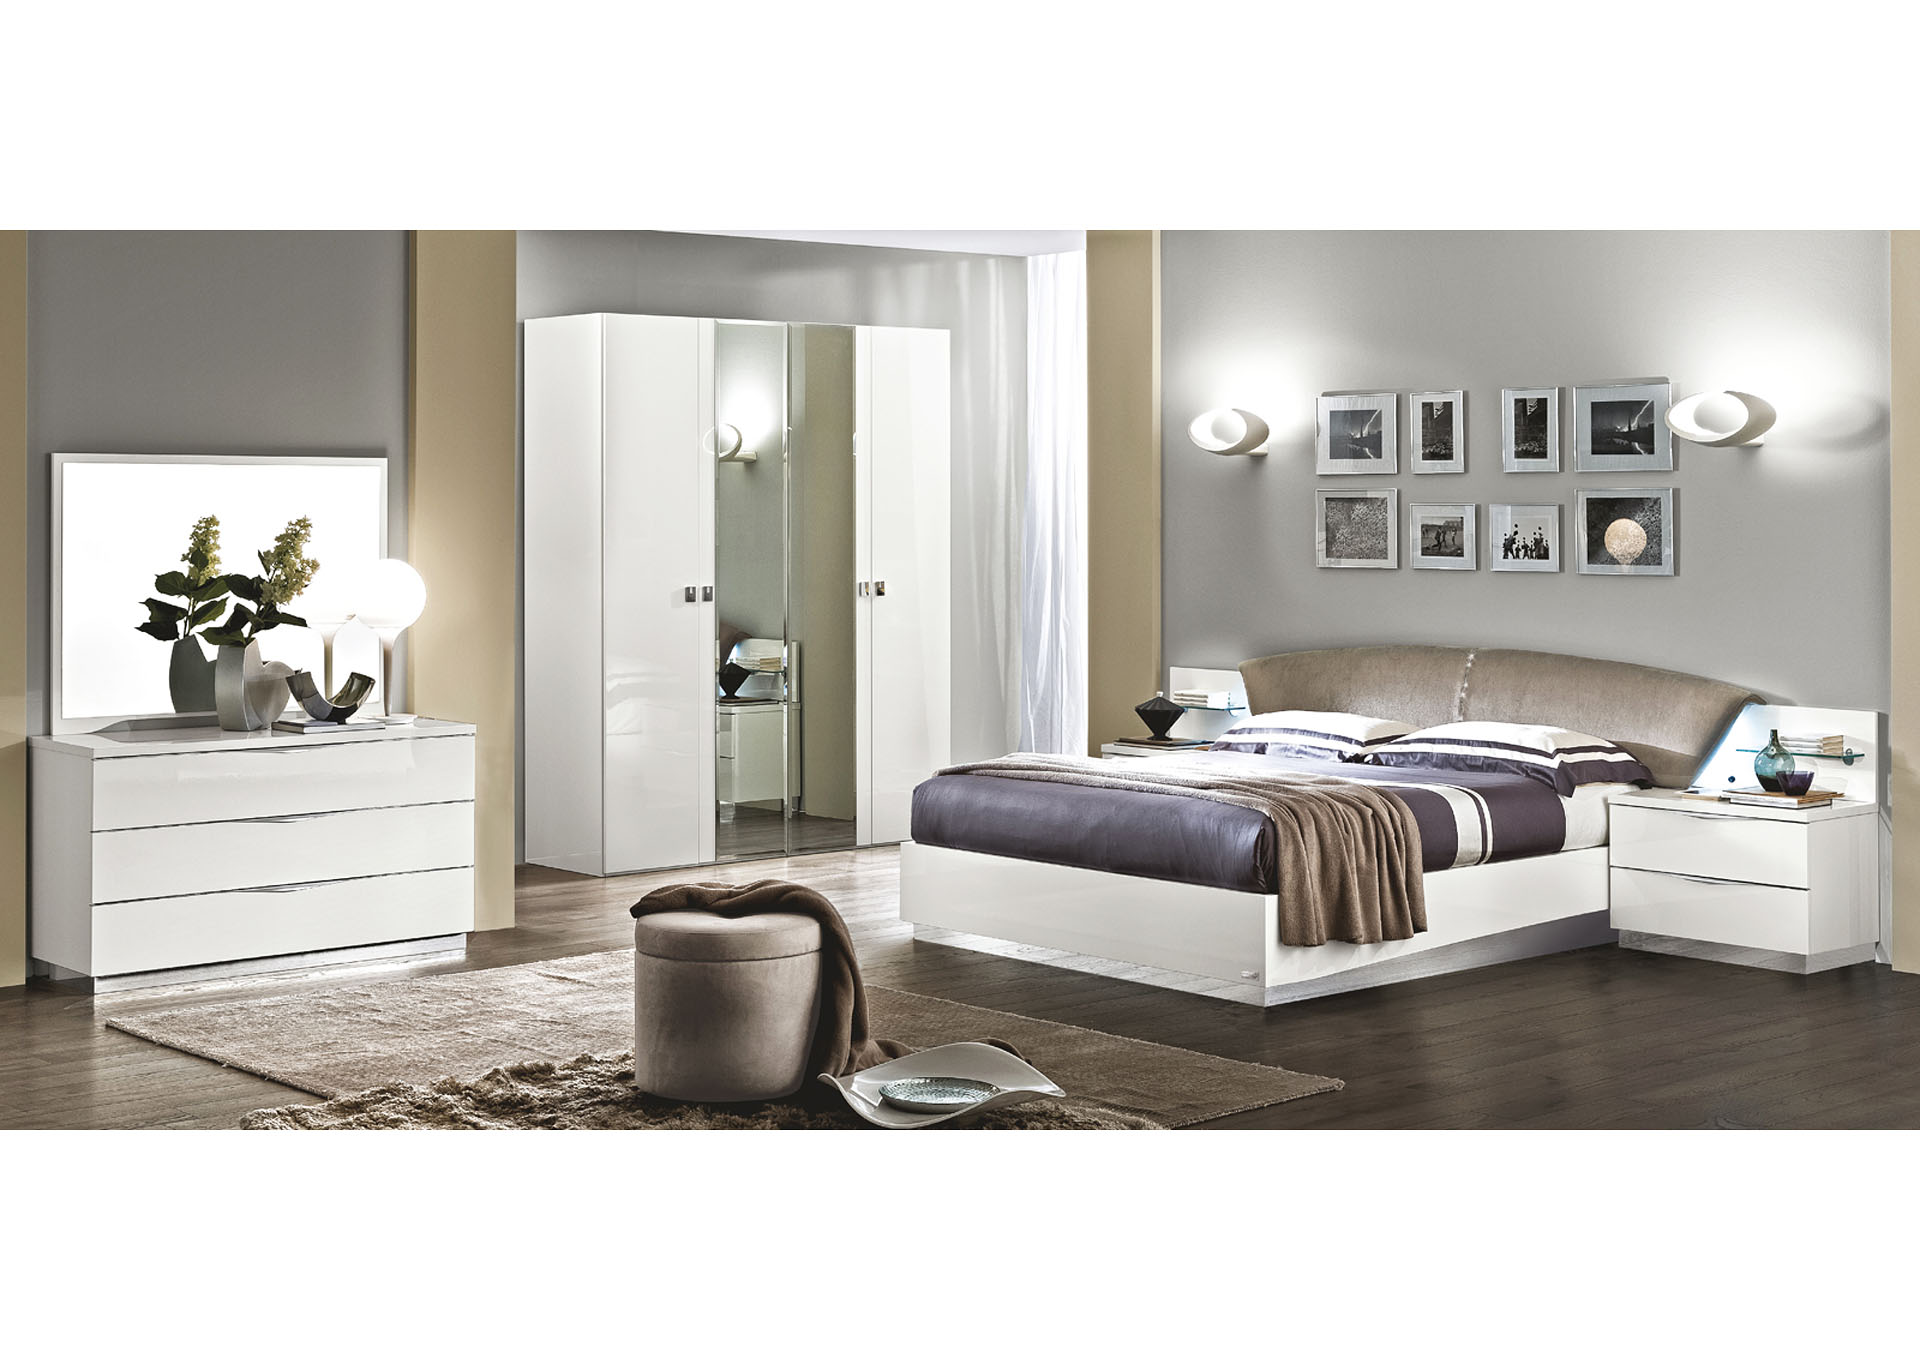 Onda Beige & White Standard Frame Queen Bed,ESF Wholesale Furniture